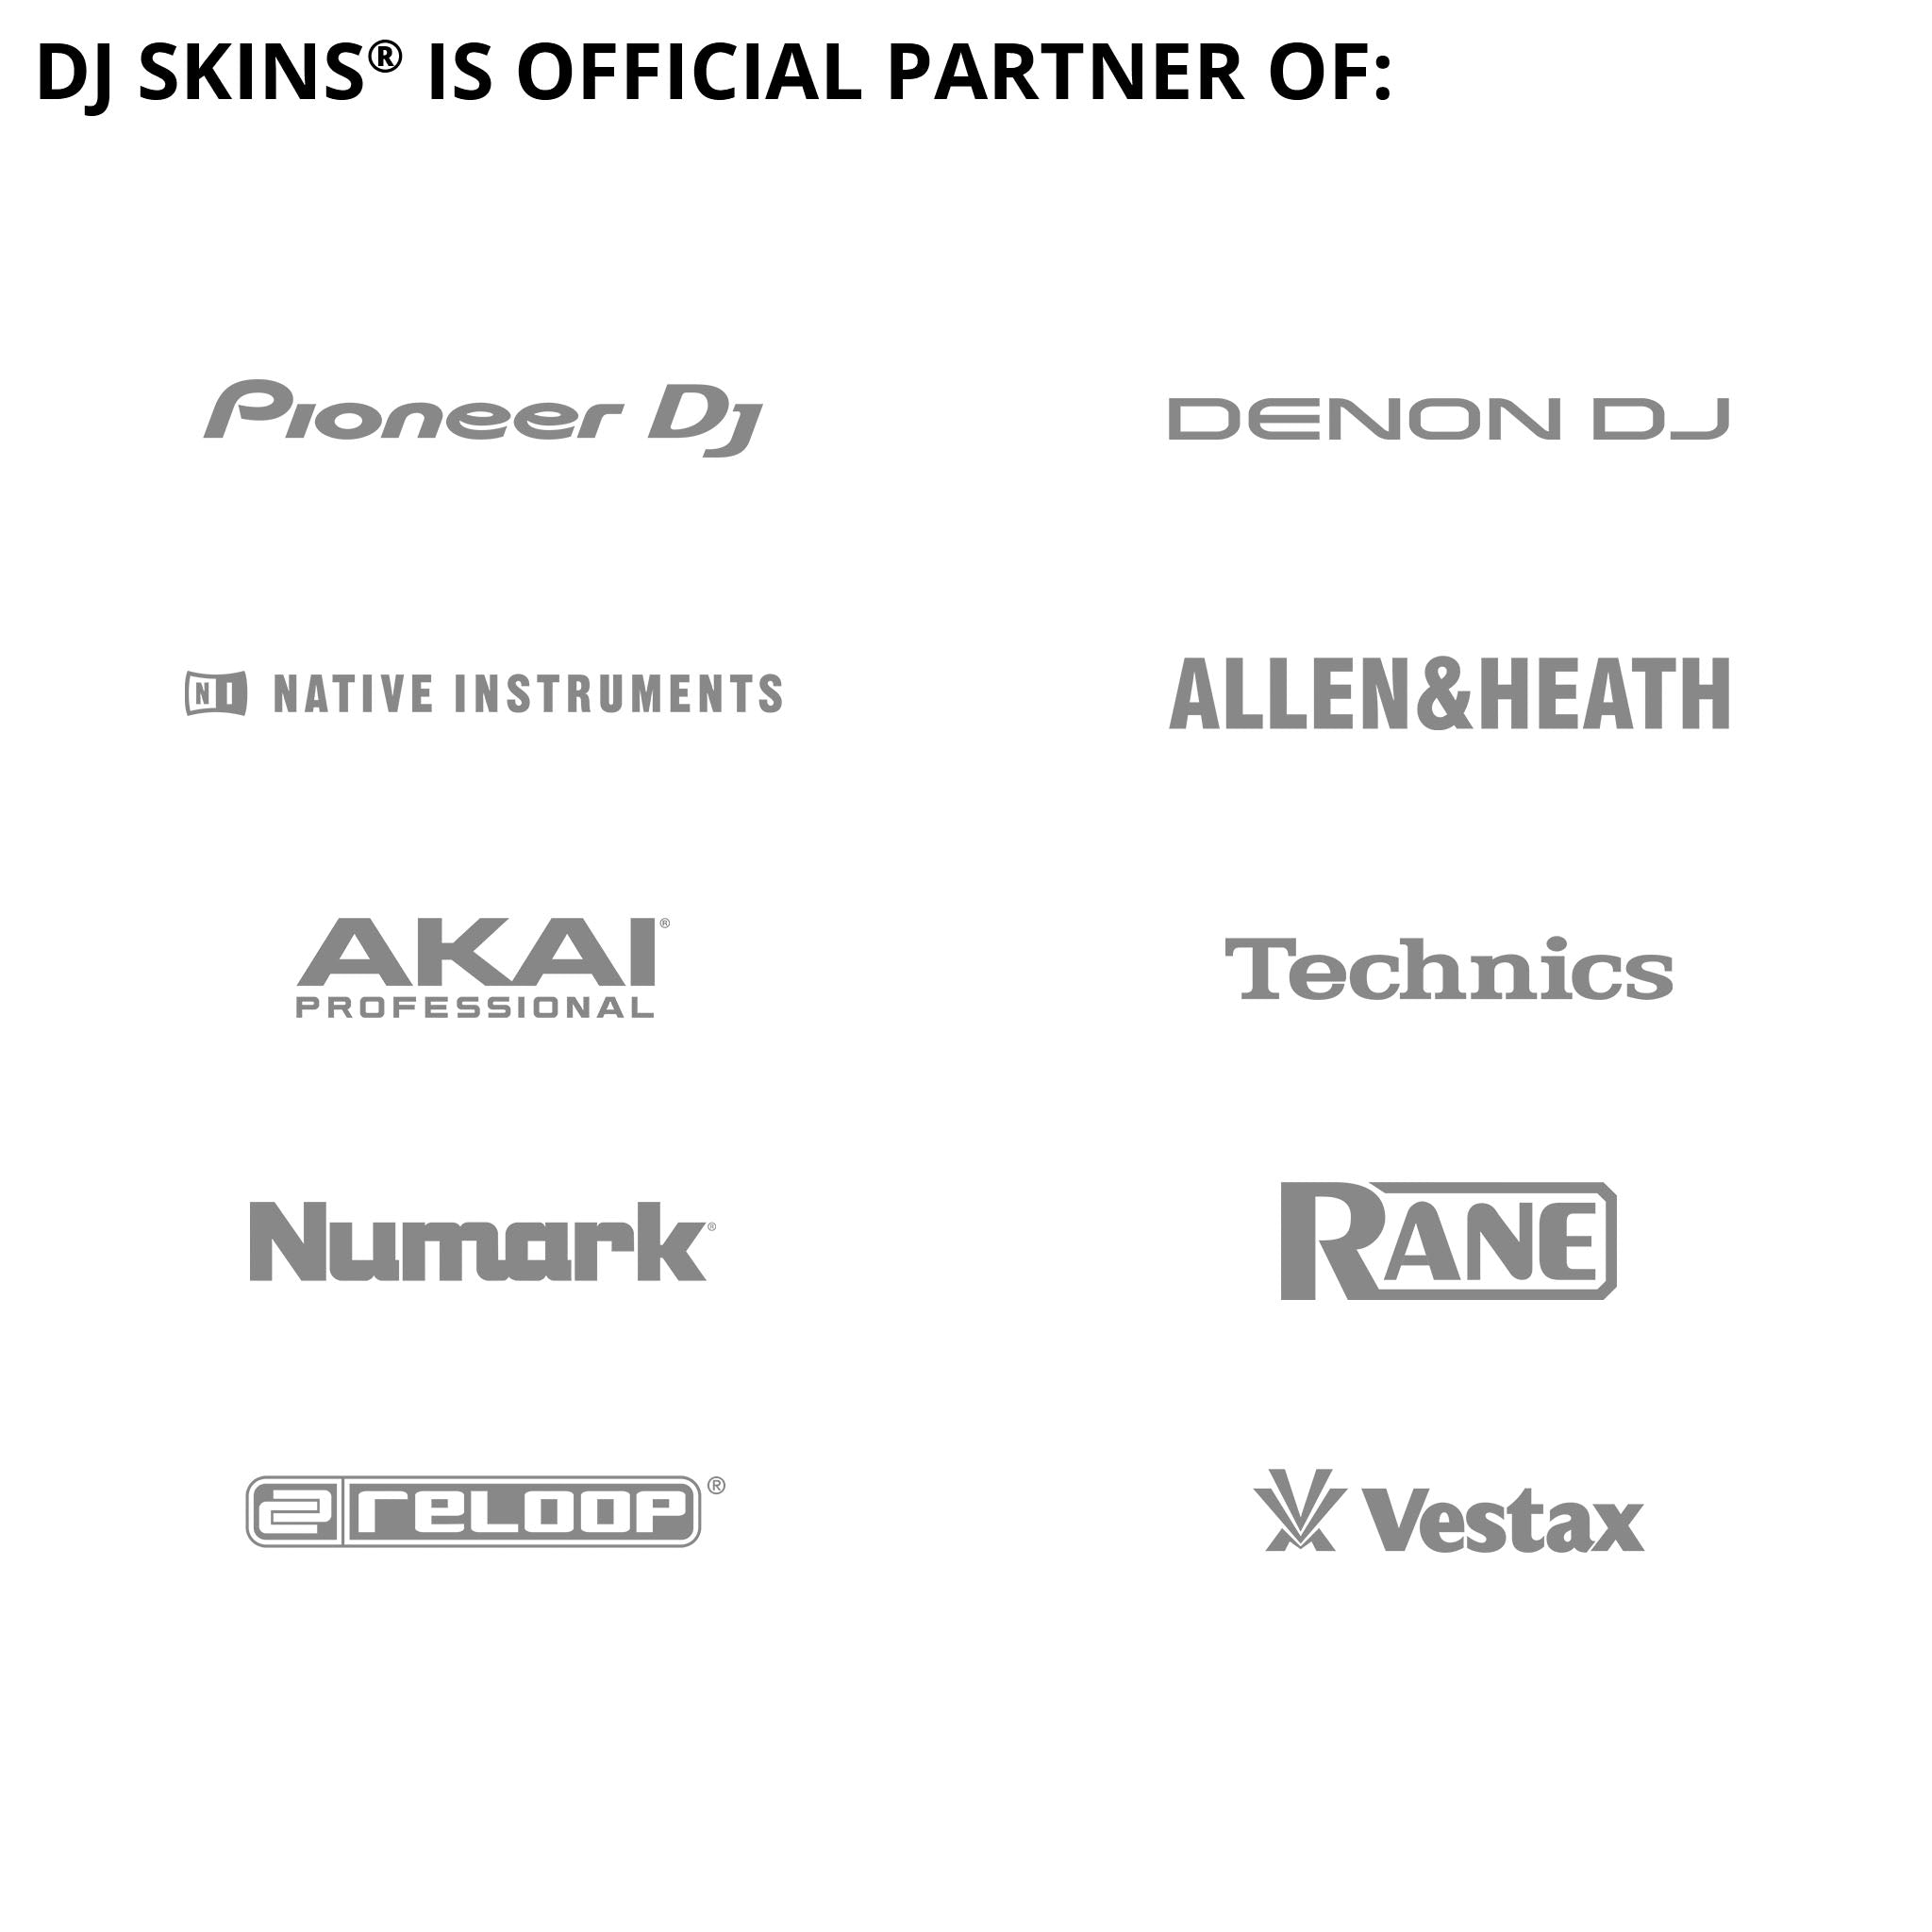 Pioneer DJ CDJ 900 Skin